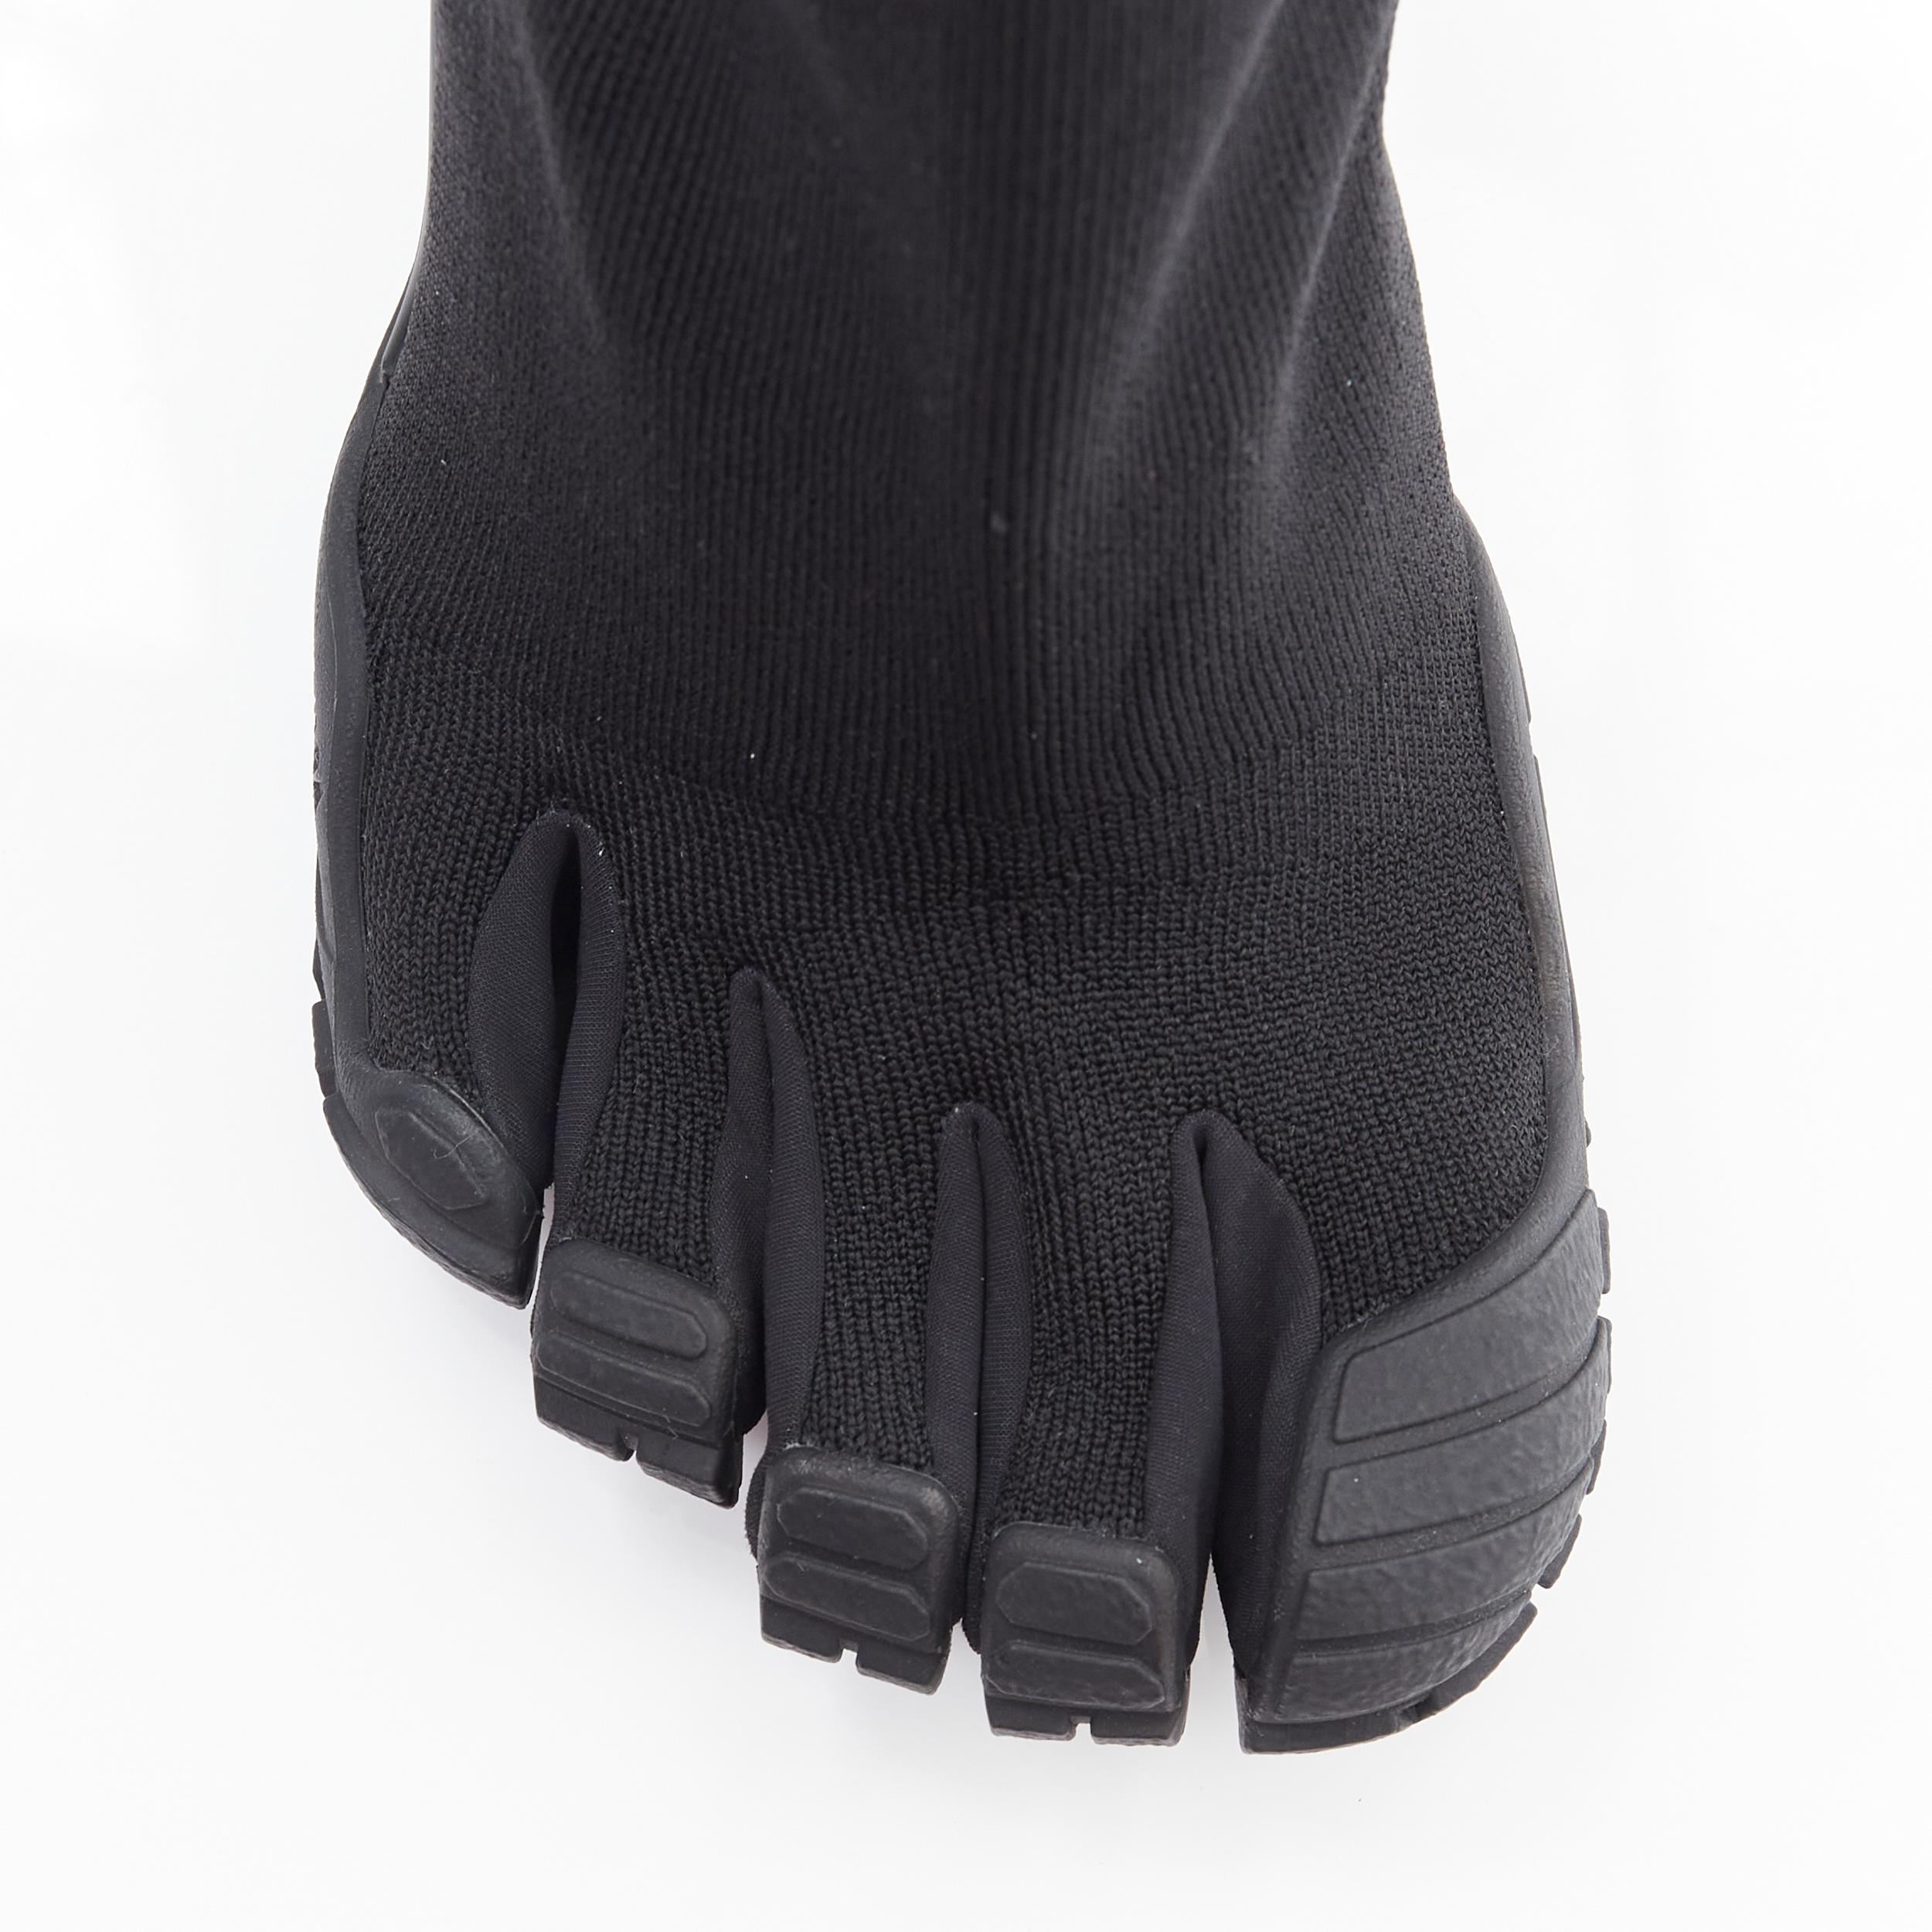 Black new BALENCIAGA 2020 Runway 5 Toe Tabi Ninja Vibram sock boots EU37